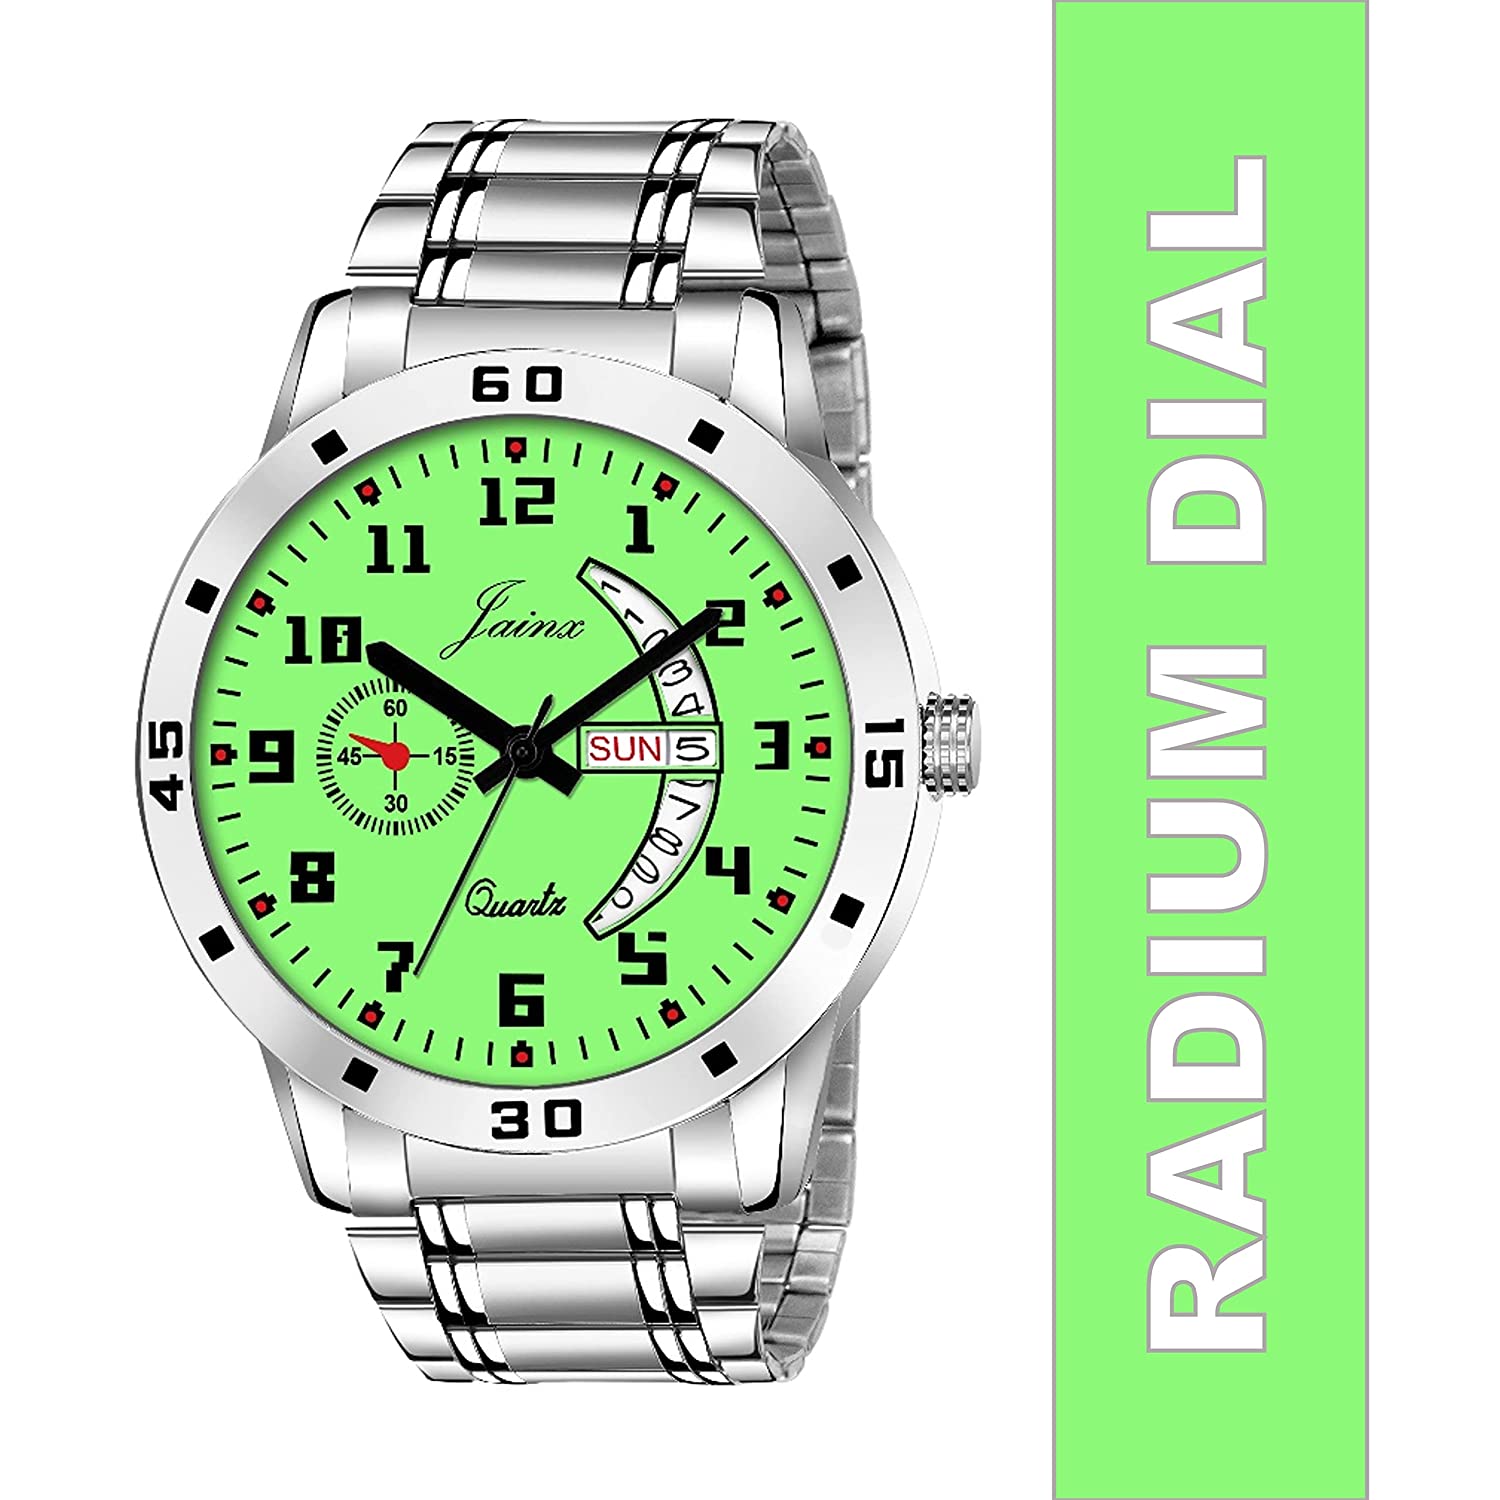 Radium watches for men